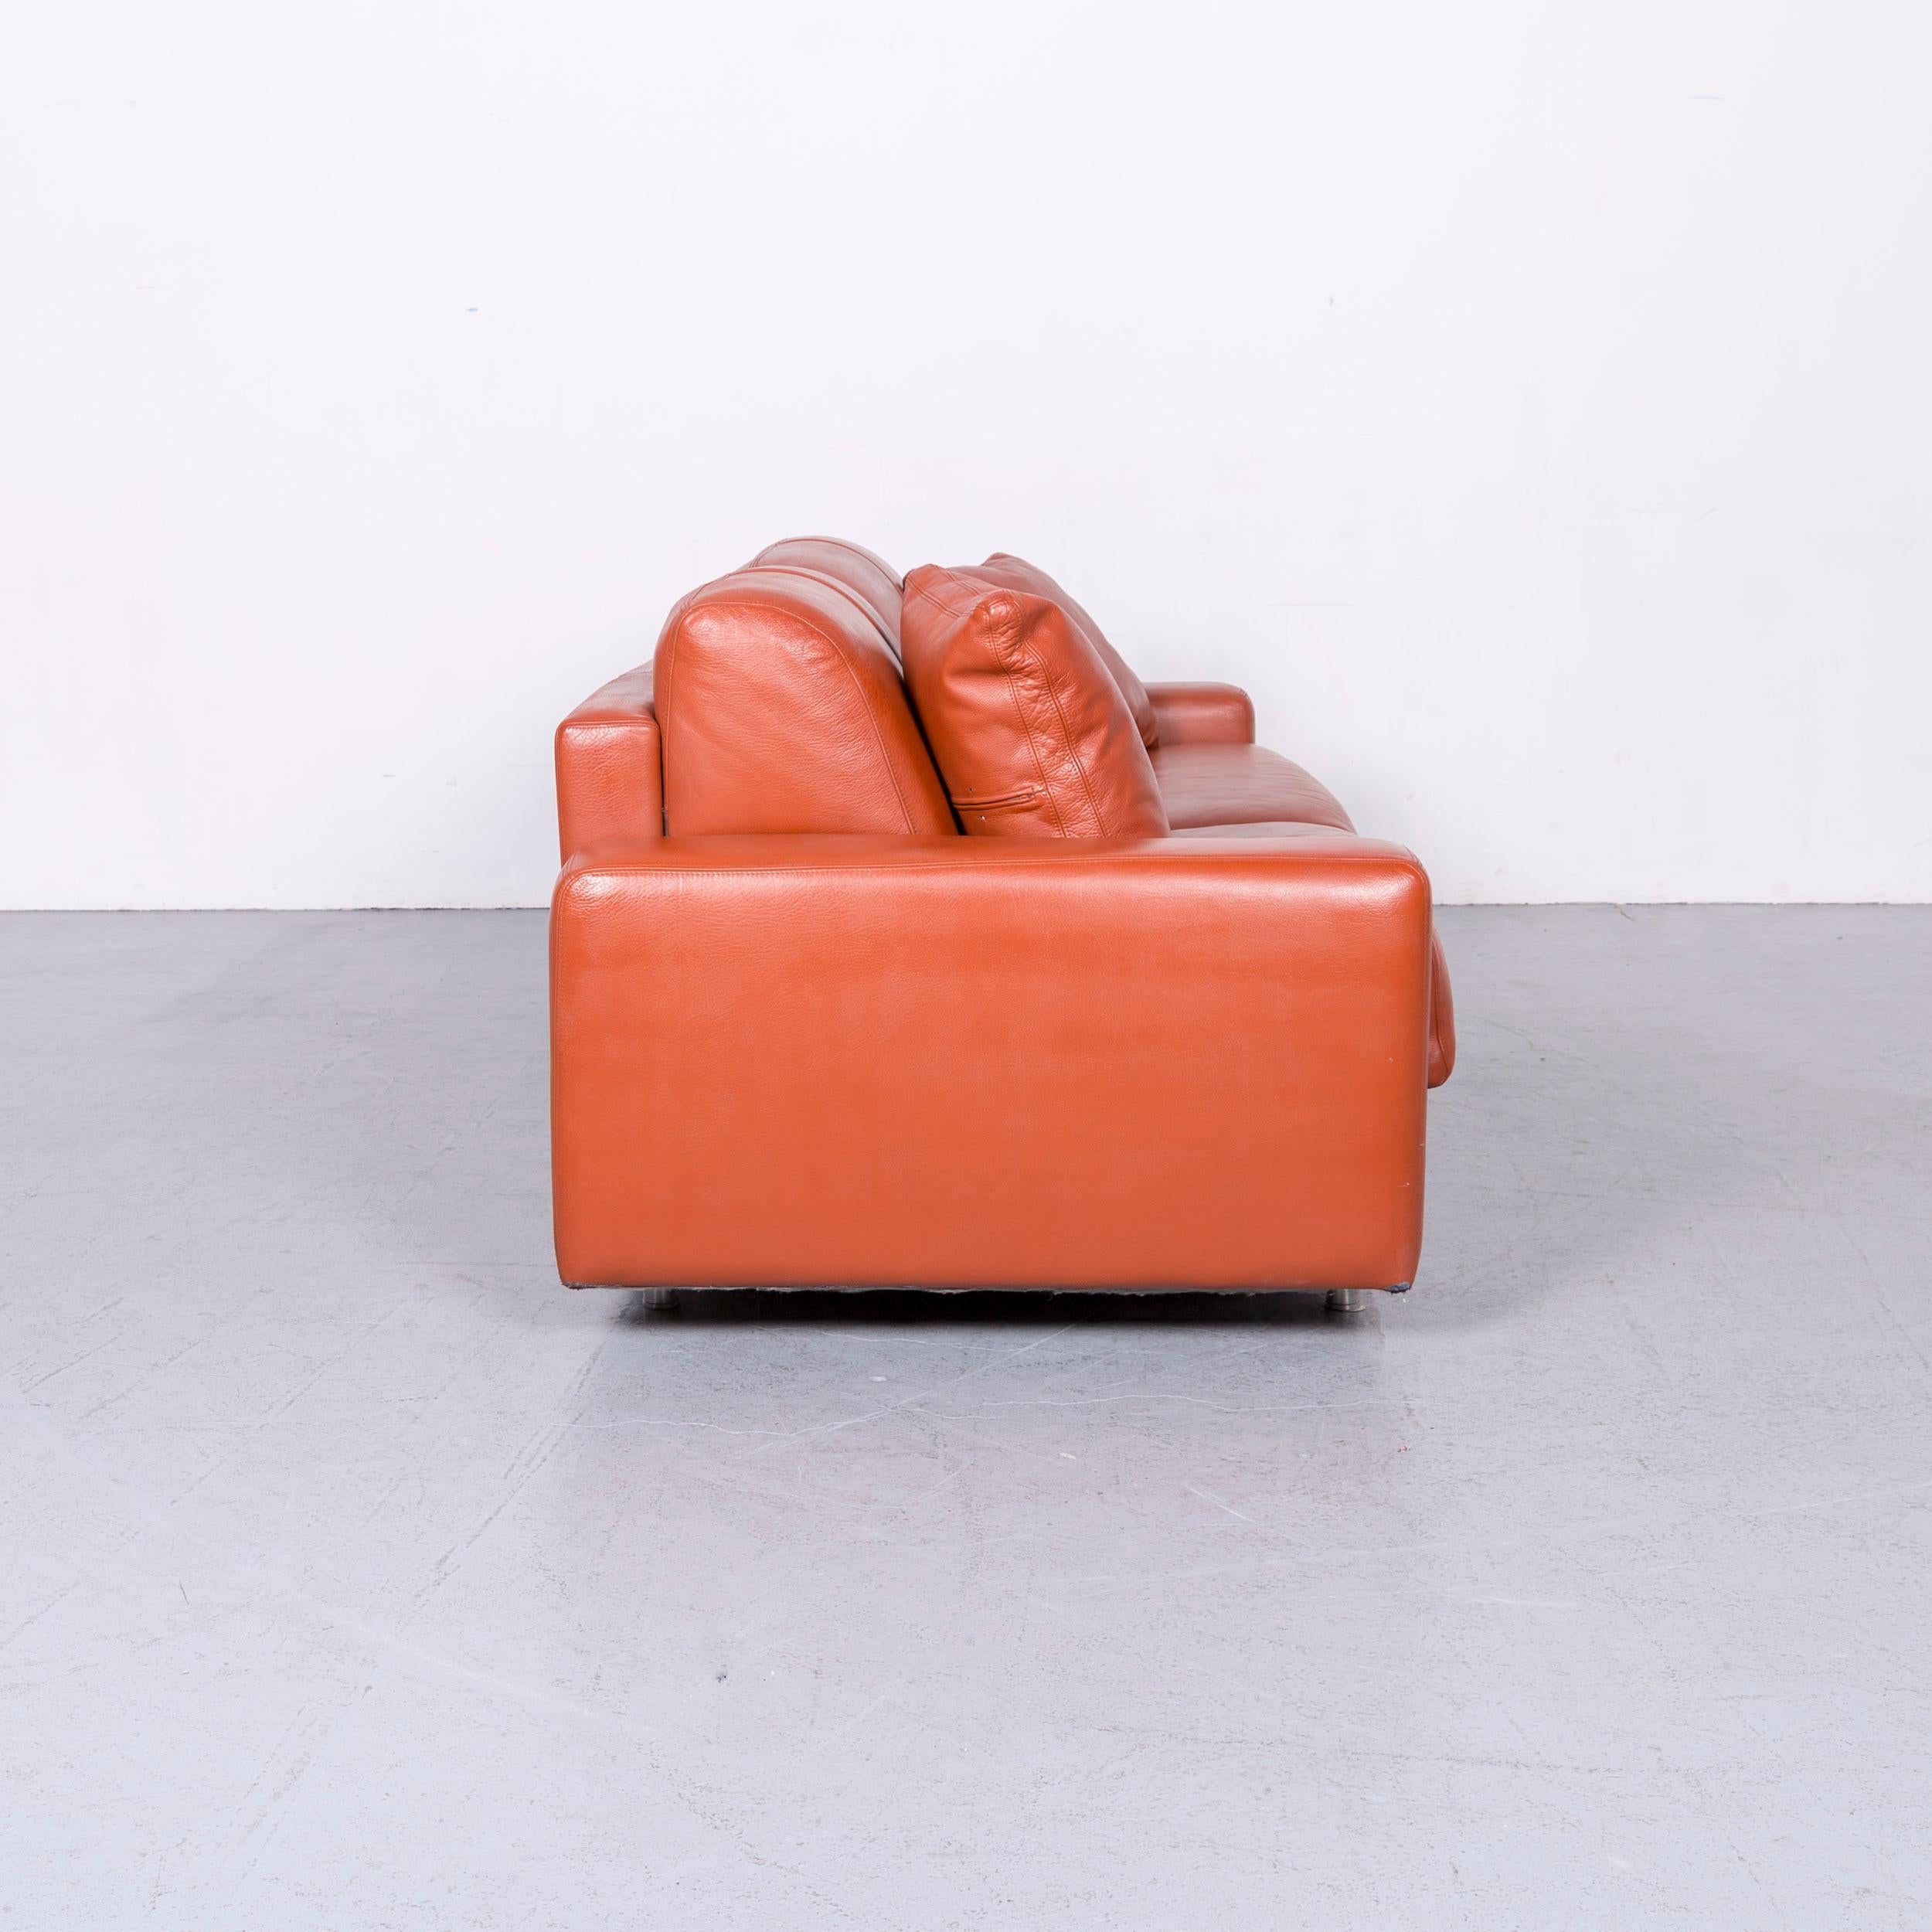 Cramer Leather Bed Sofa Orange Three-Seat Couch 3